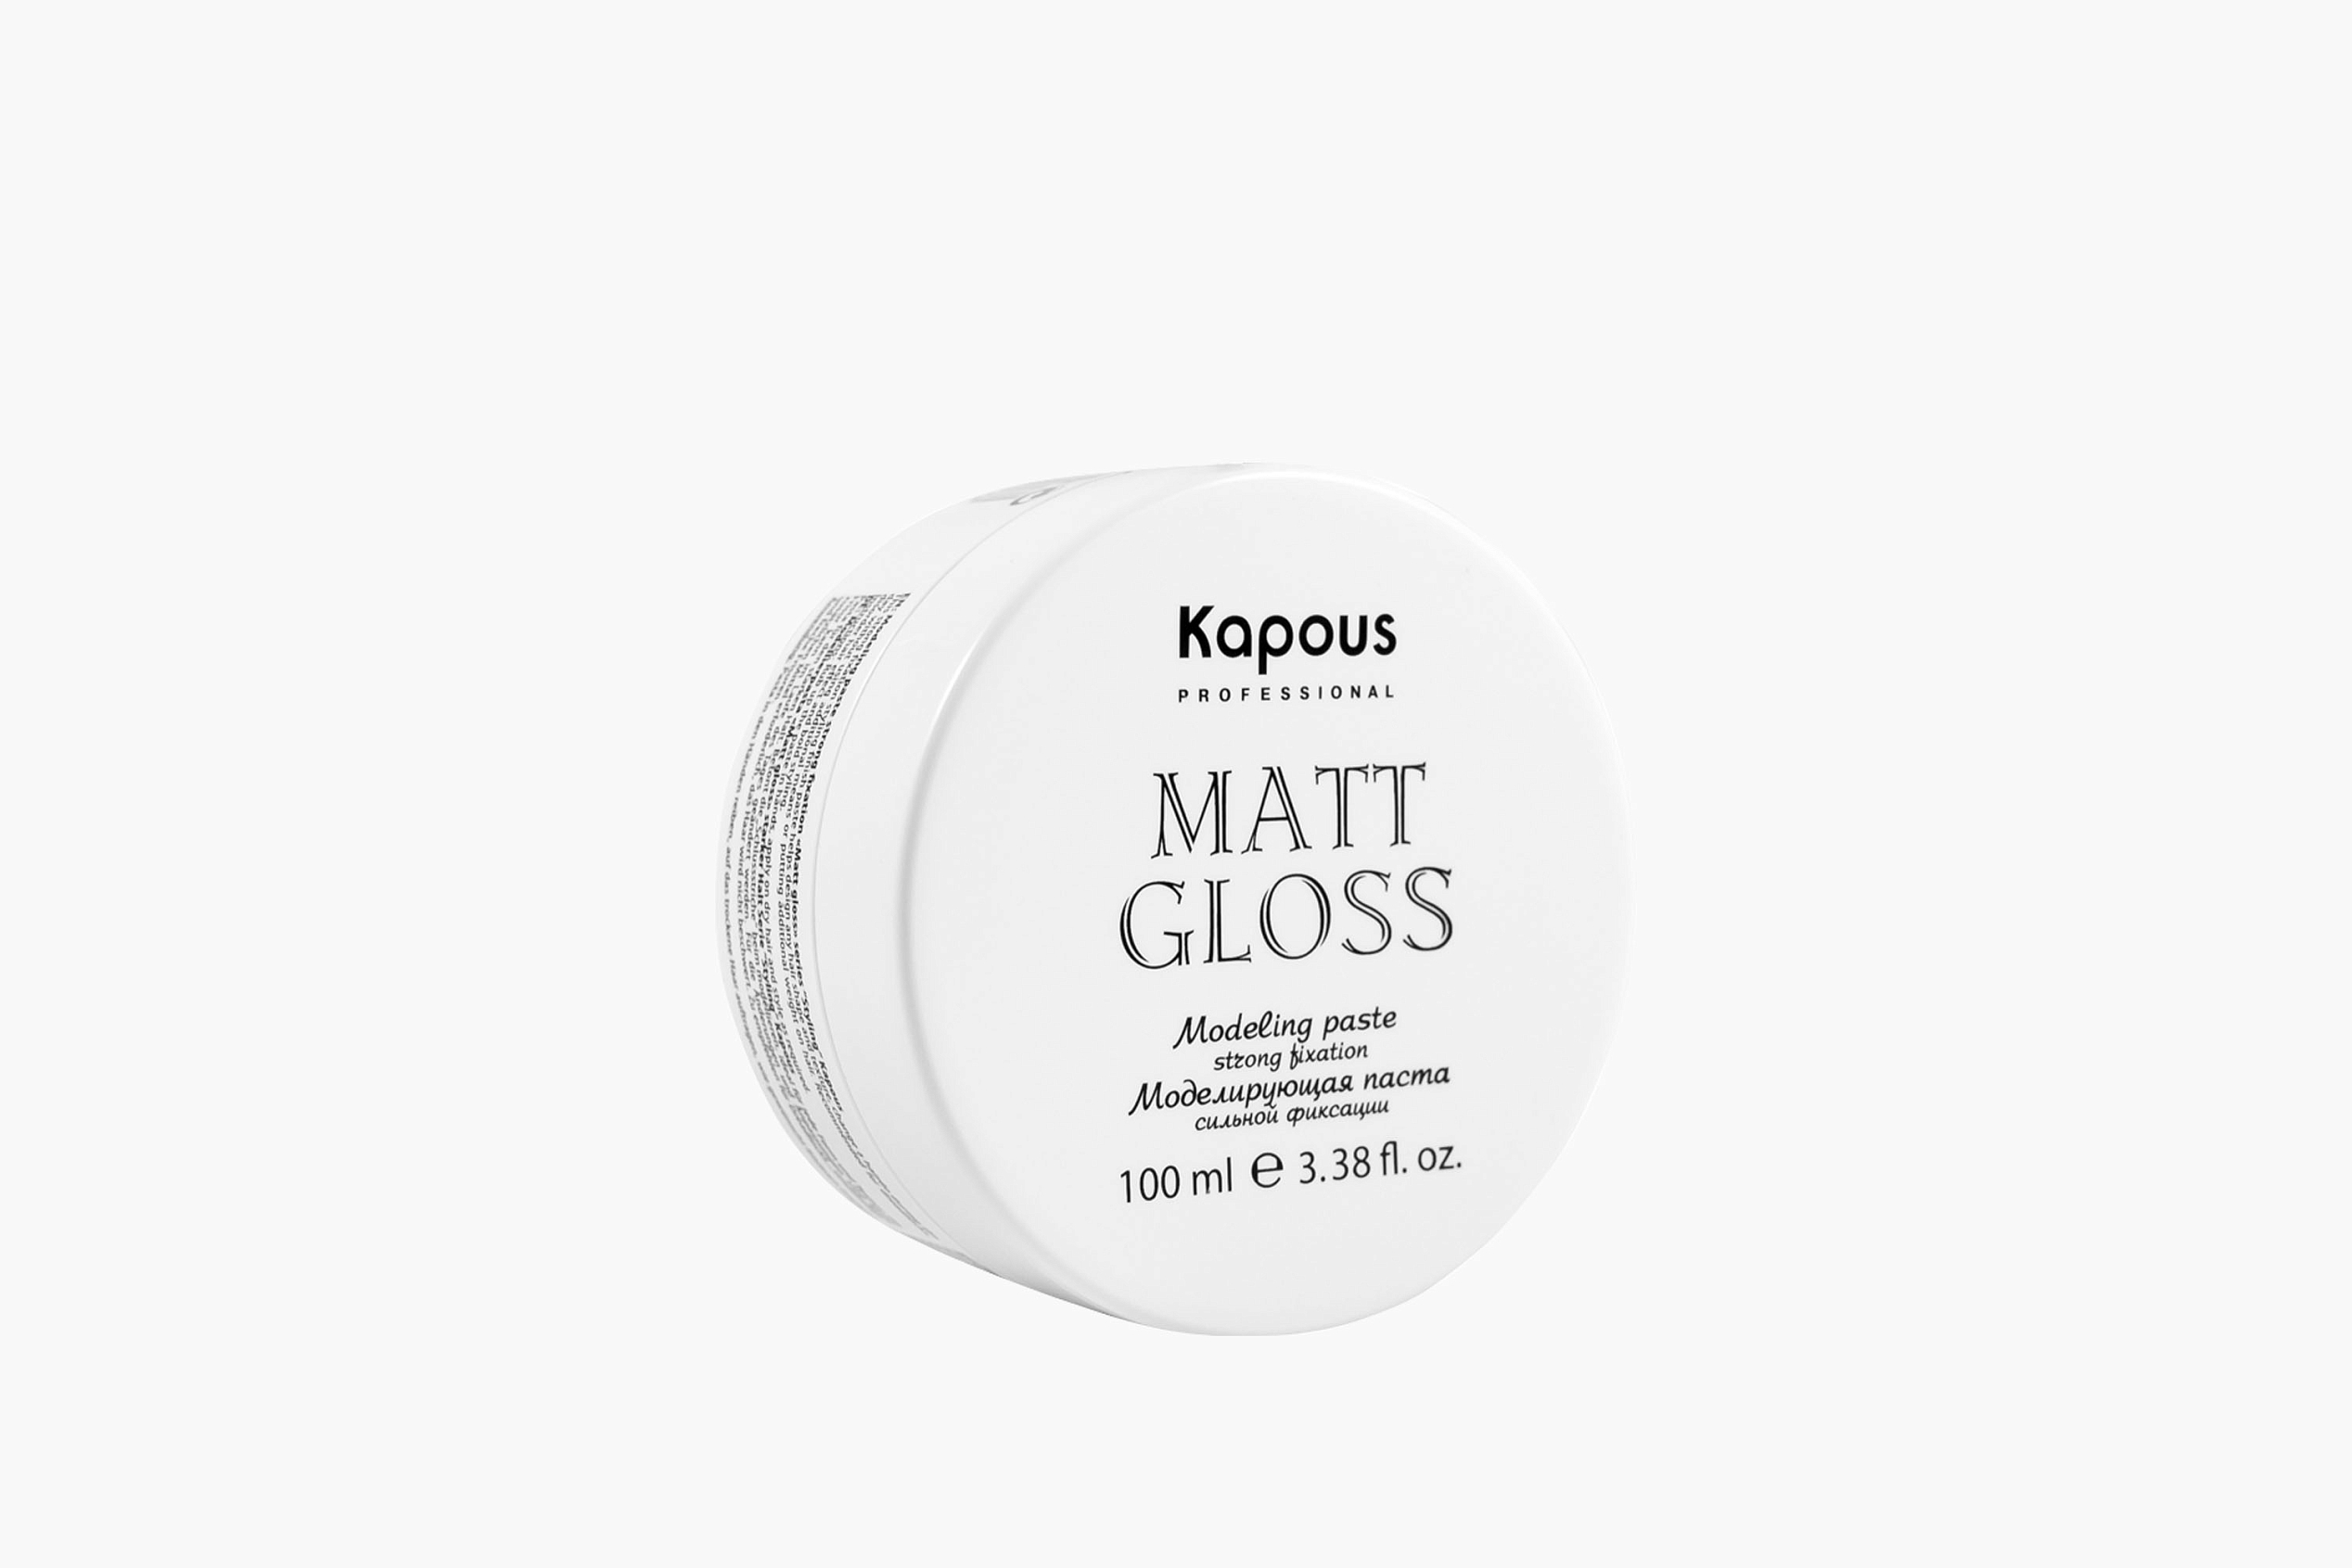 Kapous Professional Matt Gloss фото 1